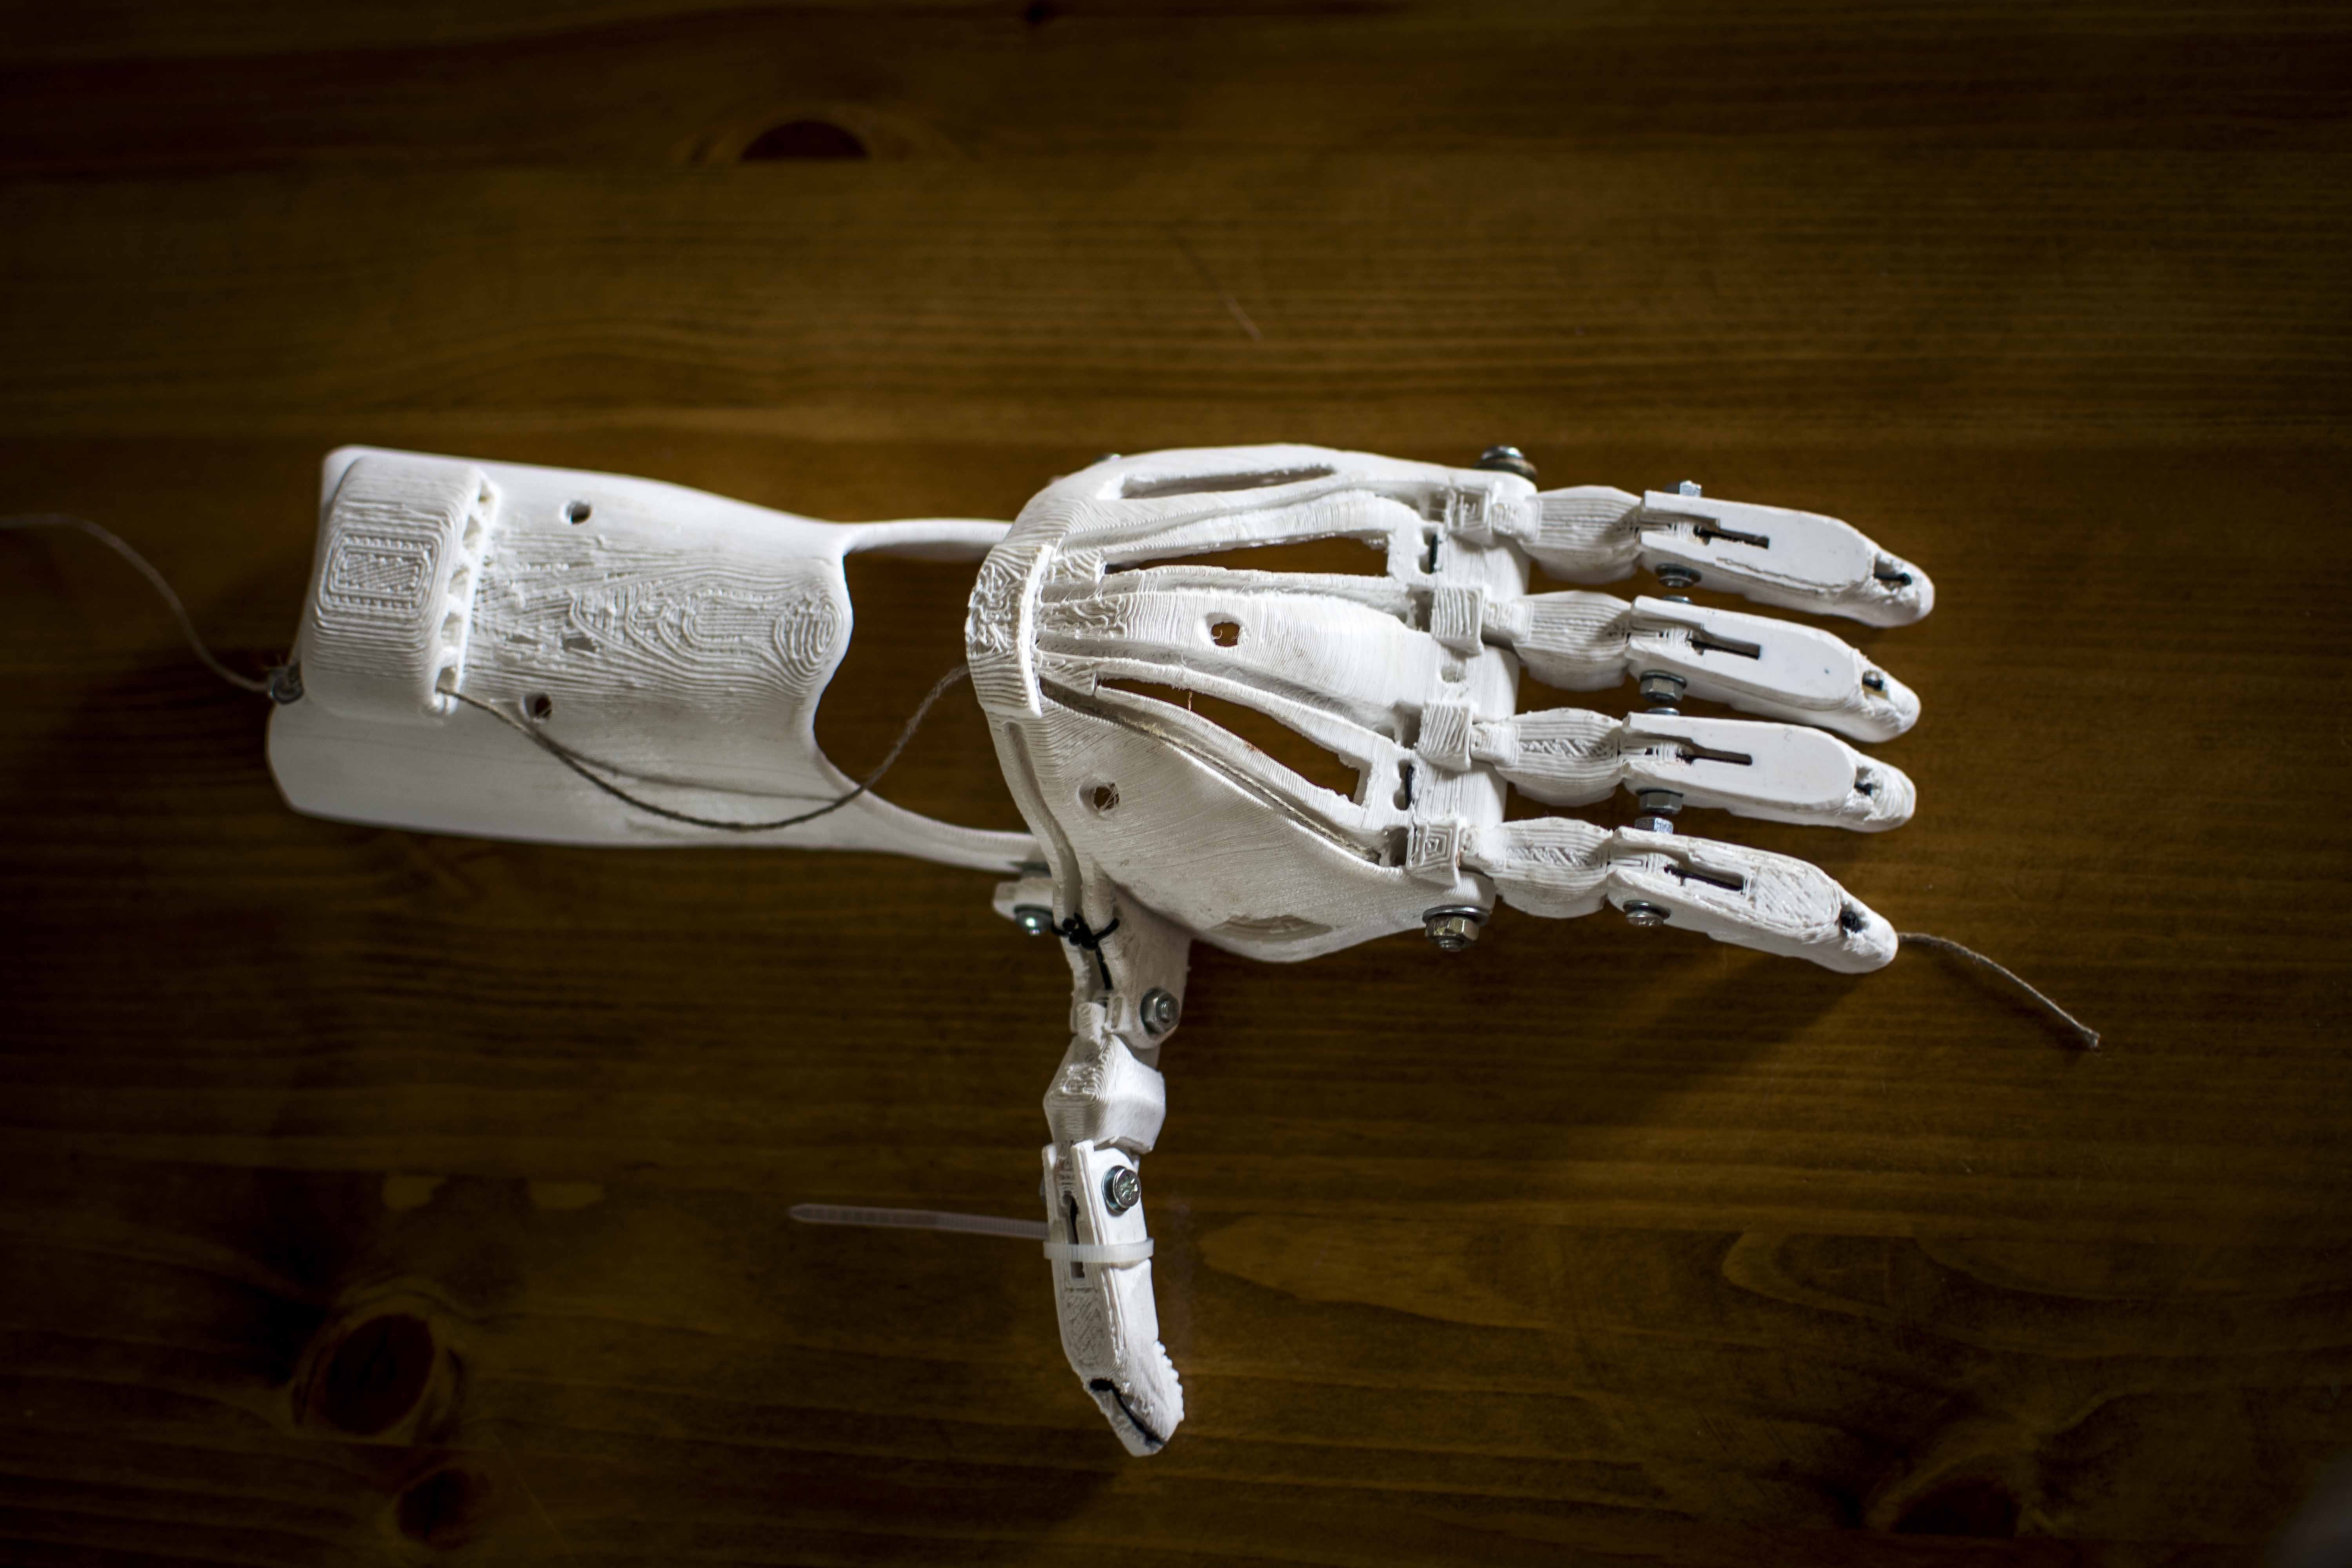 3D printed bionical hand